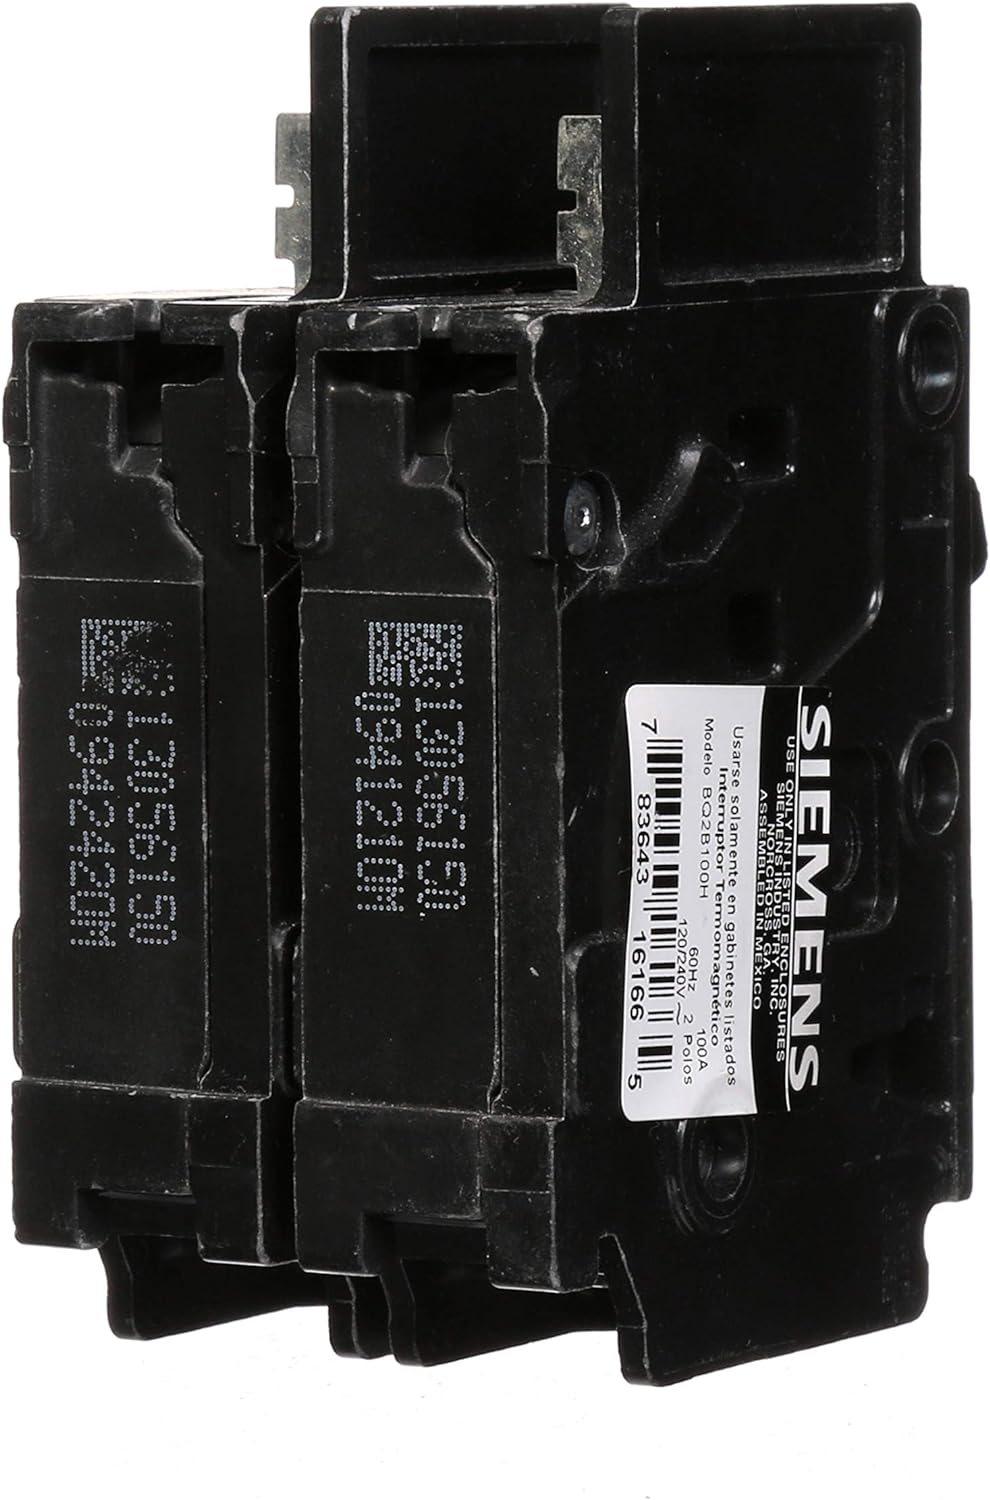 BQ2B090H - Siemens - 90 Amp Molded Case Circuit Breaker